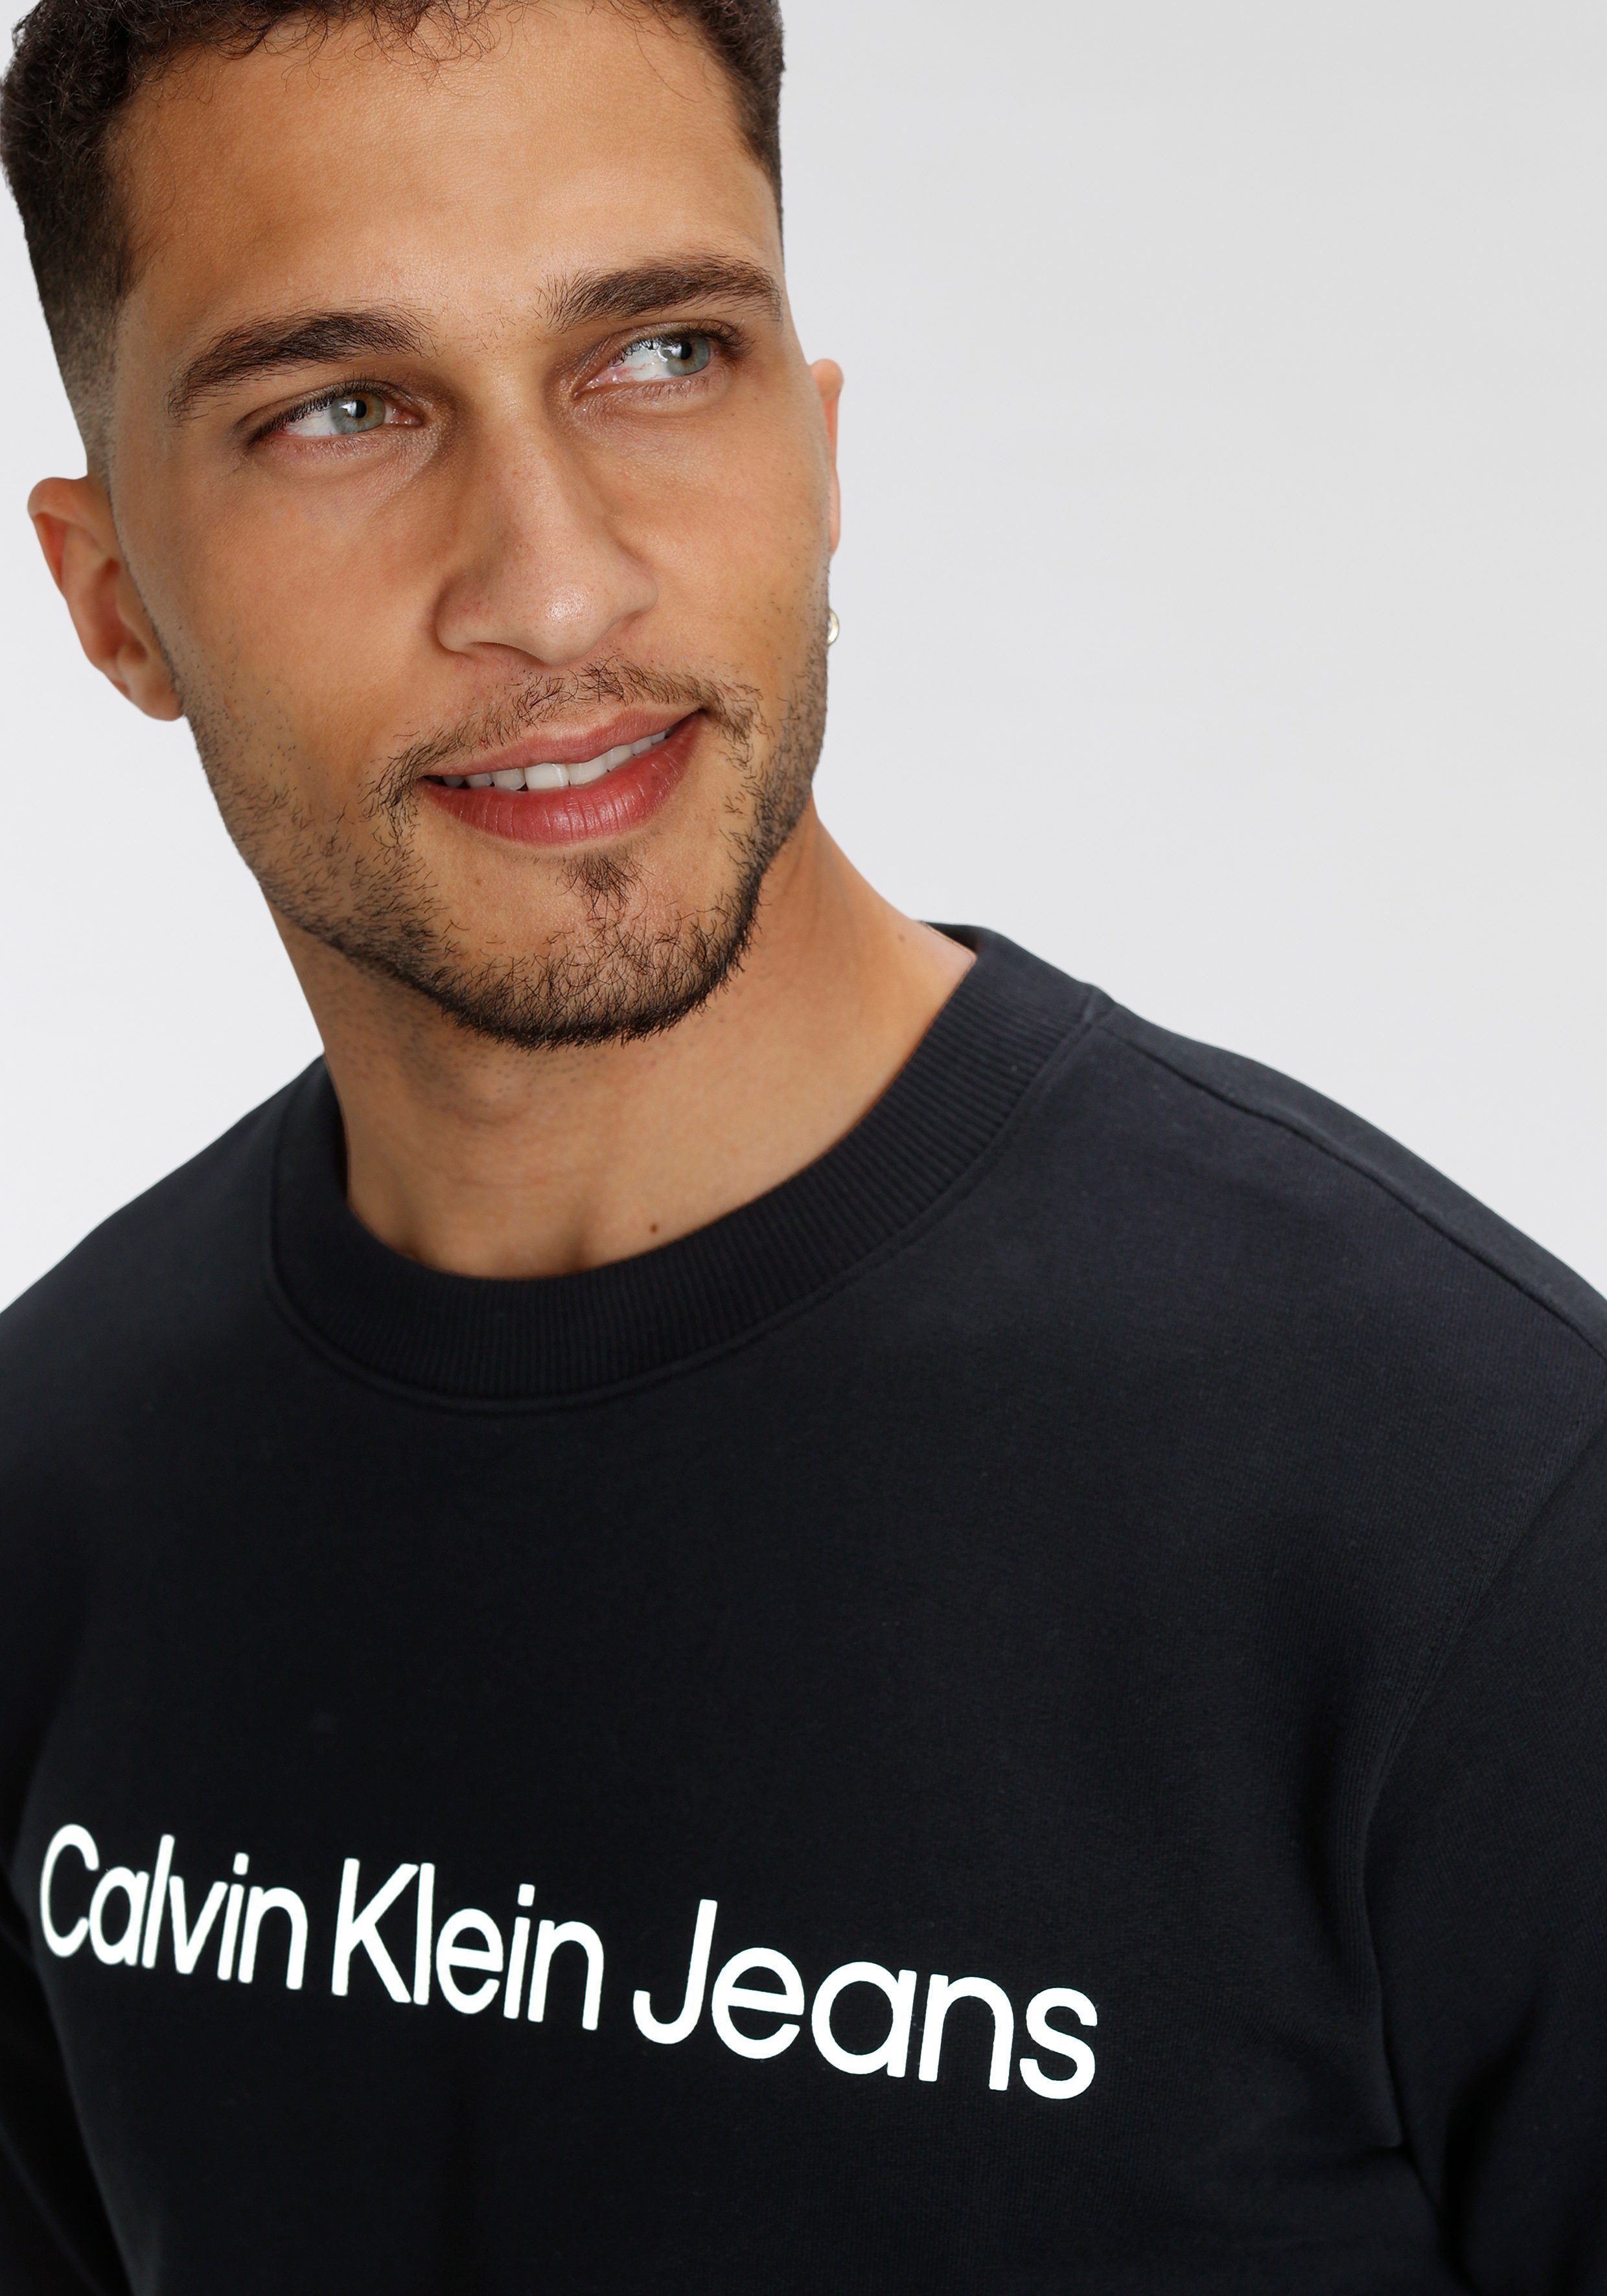 SWEATSHIRT Klein Jeans Calvin INSTIT CORE LOGO Sweatshirt